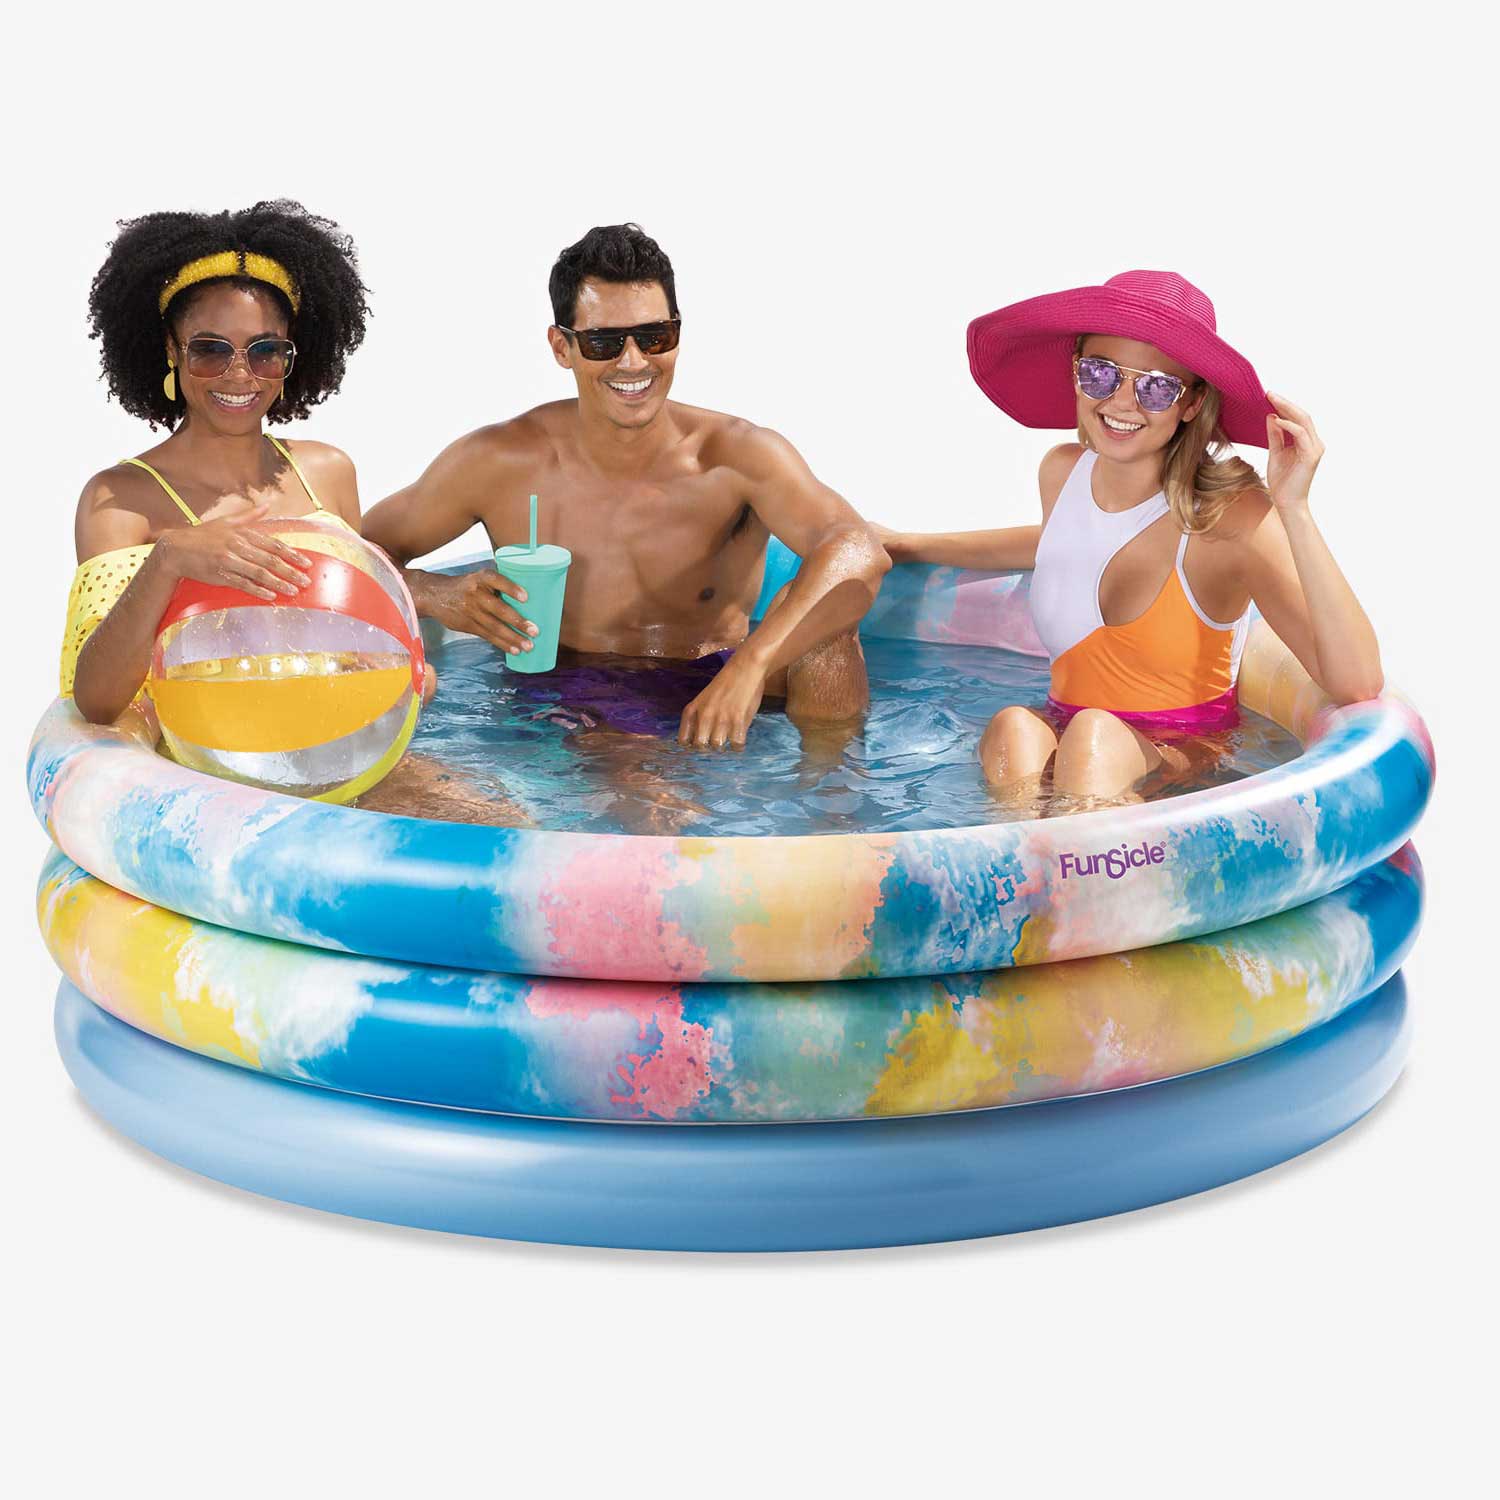 Funsicle Summer Vibes Pool